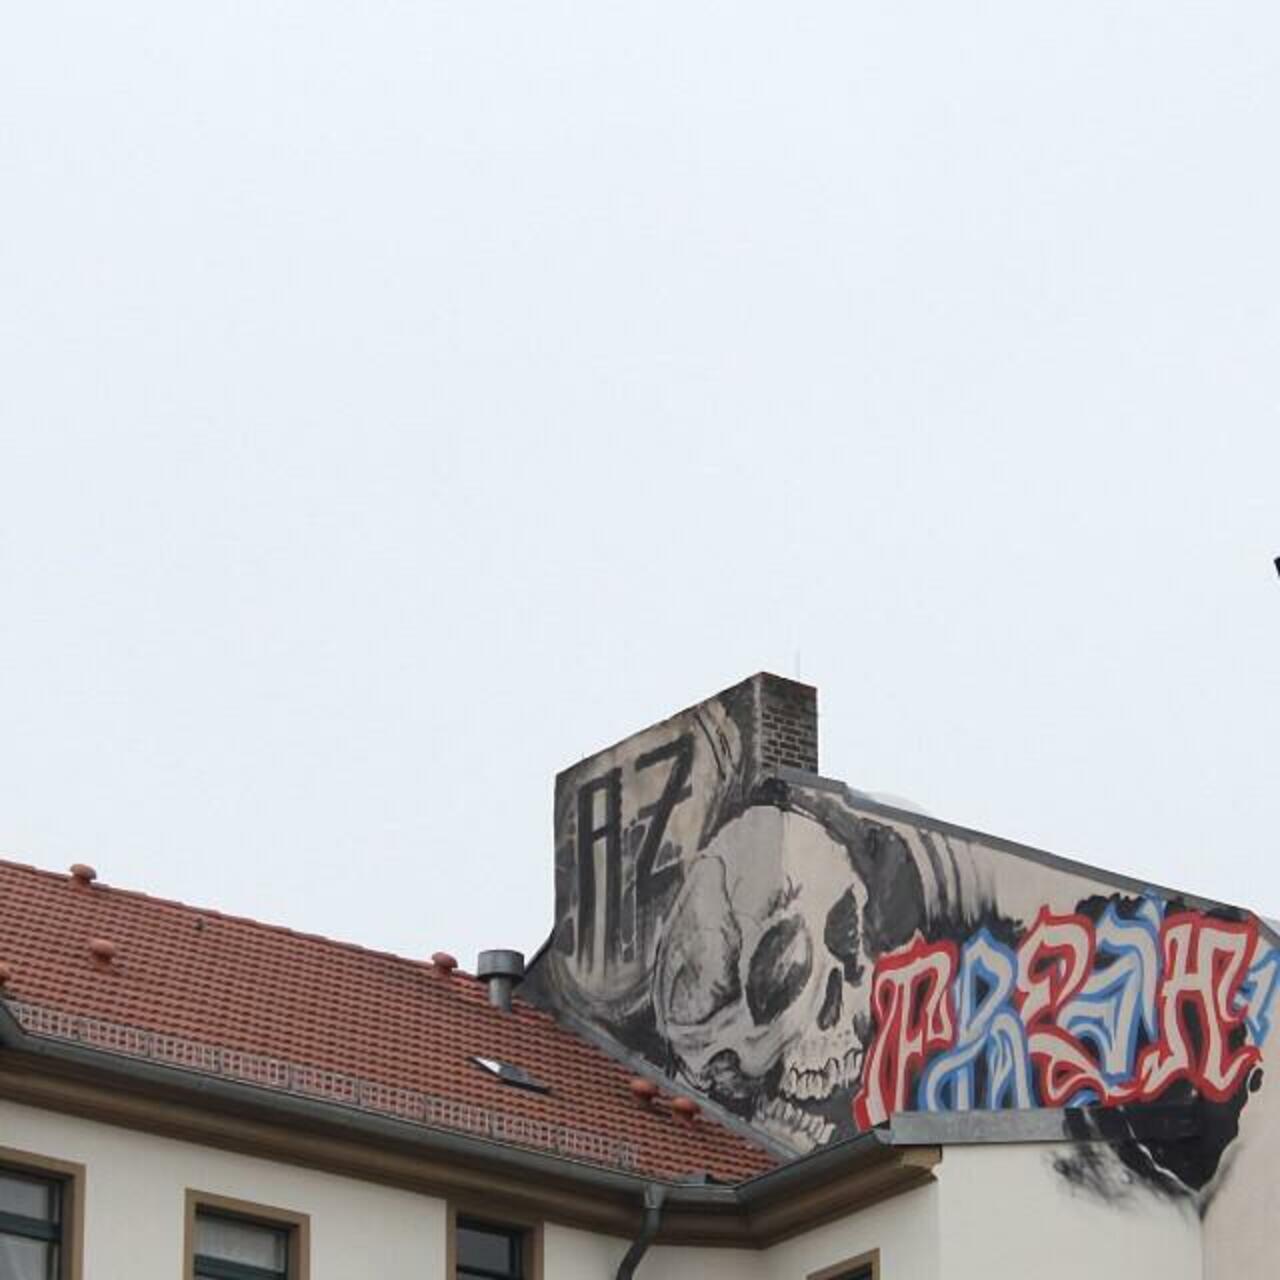 #Berlin #Allemagne #streetart #street #art #urbanart #urbantag #graffiti #streetartberlin by becombegeek http://t.co/B0YjlVP6C5